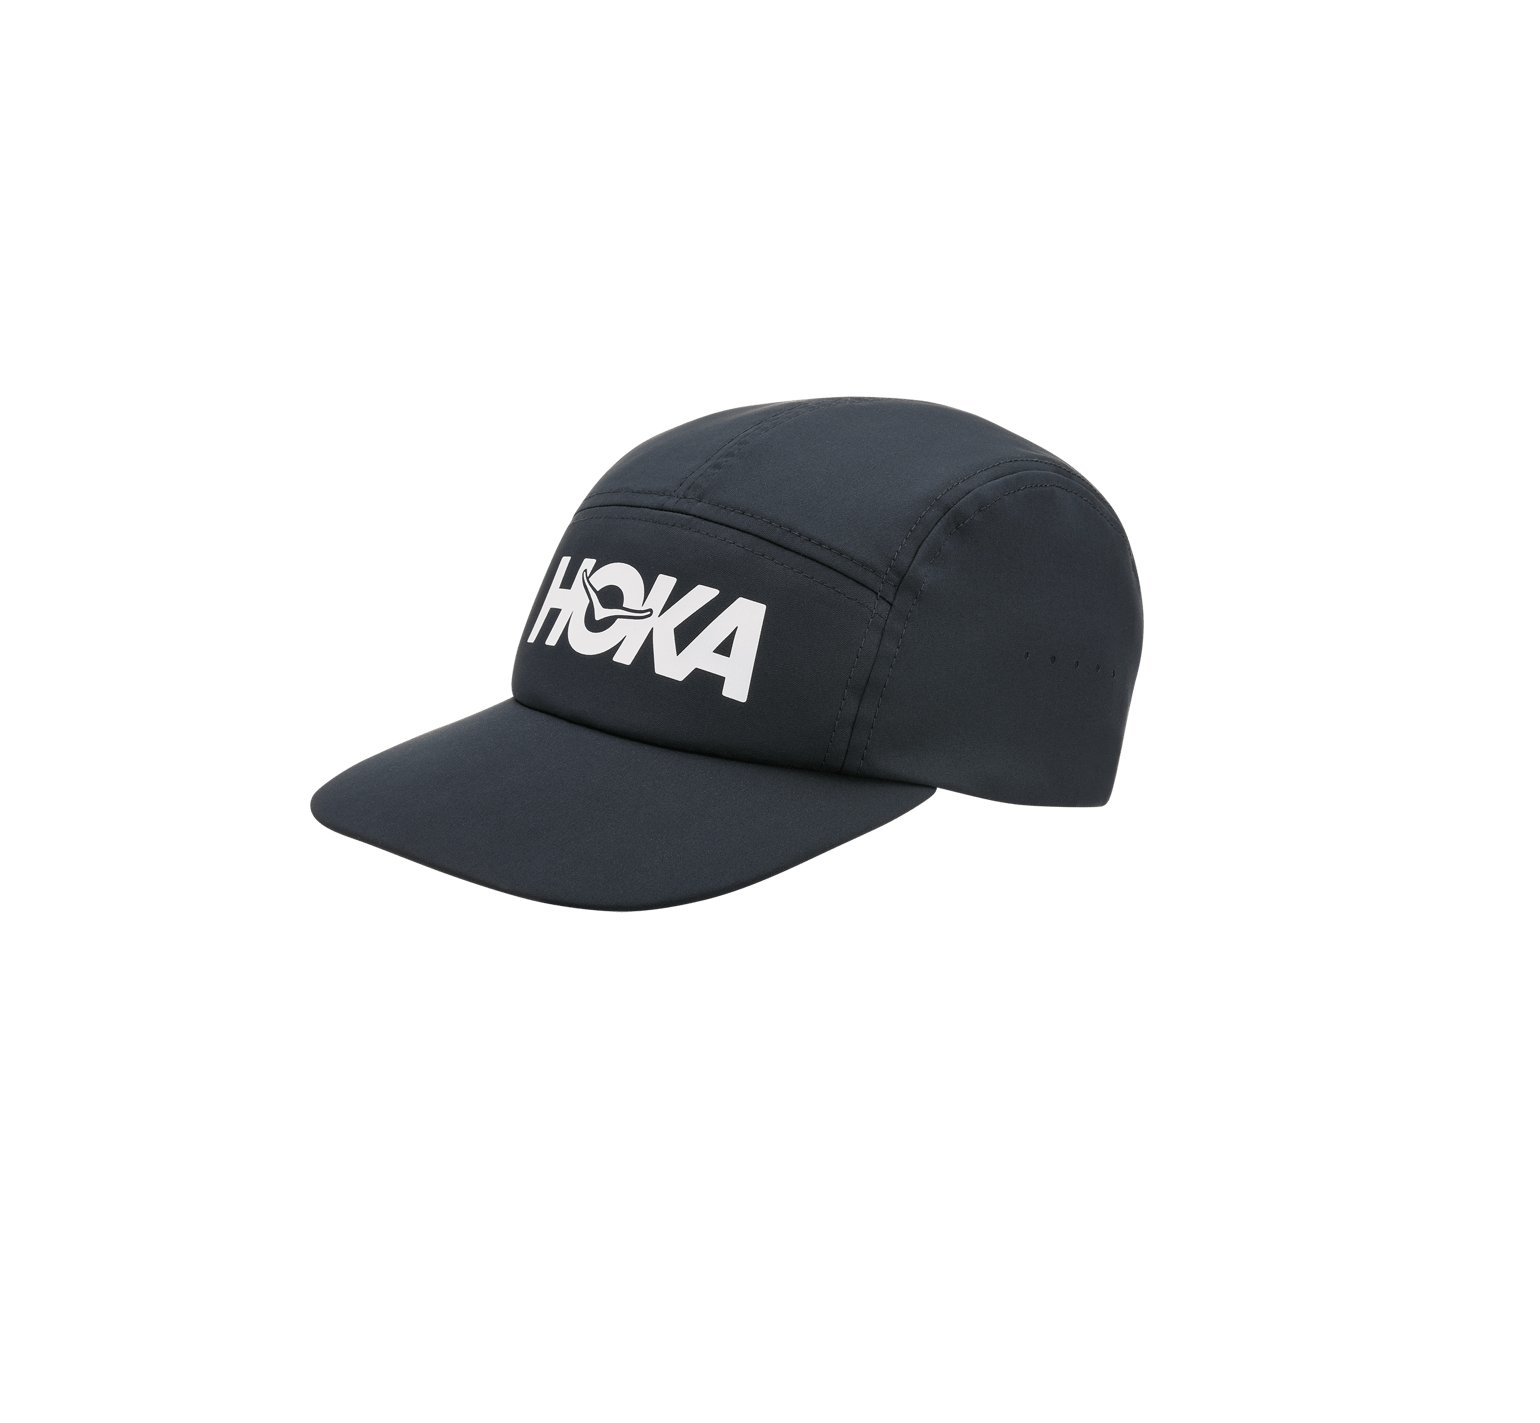 Hoka Performance Hat Black / White